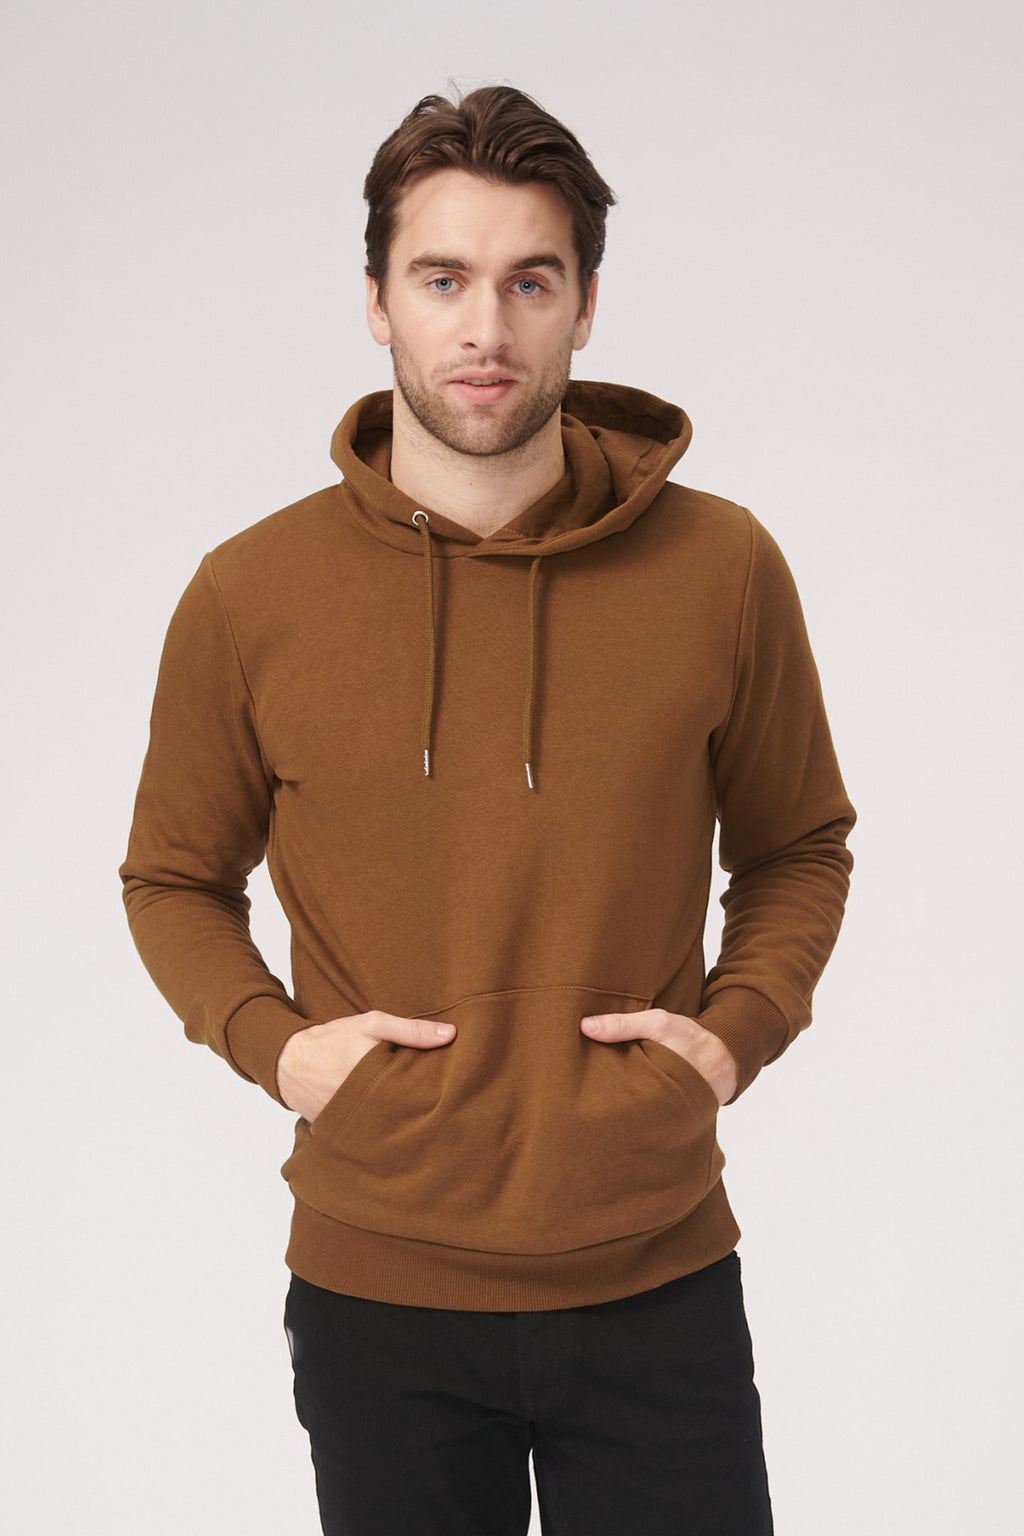 Basic Sweatsuit with Hoodie (Brown) - Package Deal